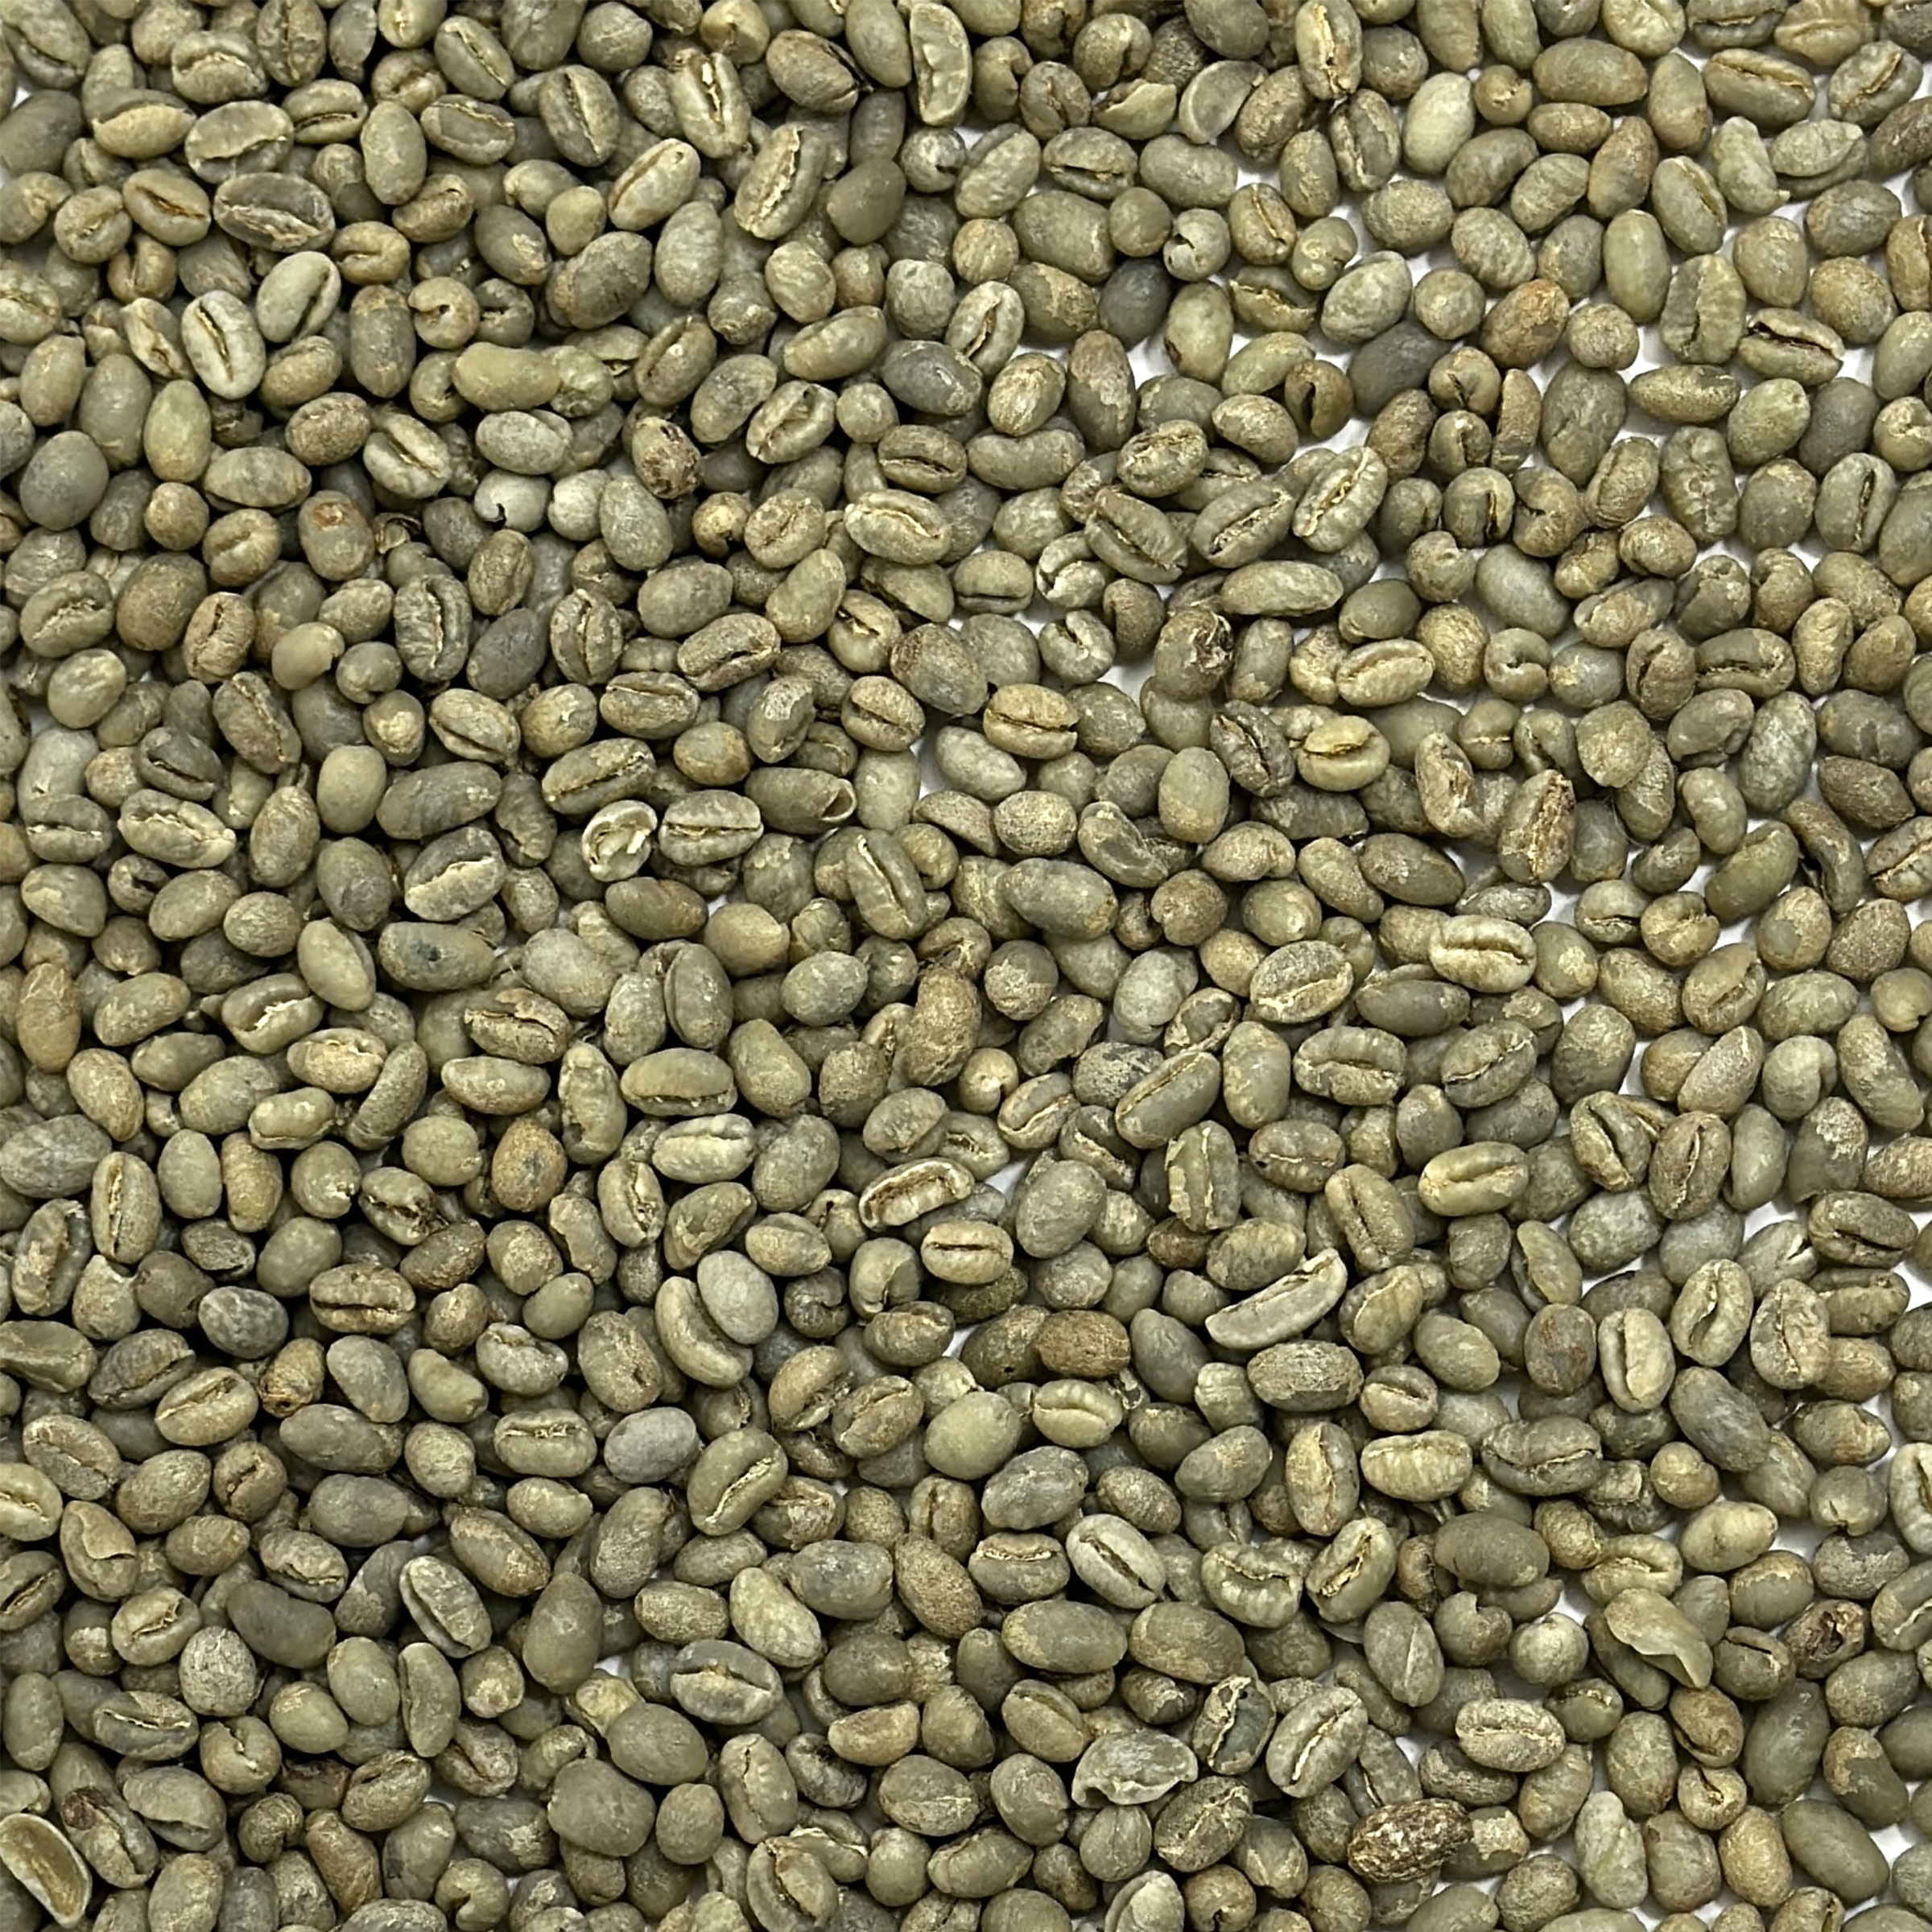 Kenya Peaberry Plus 15/16 Green Coffee Beans - Coffee Bean Corral